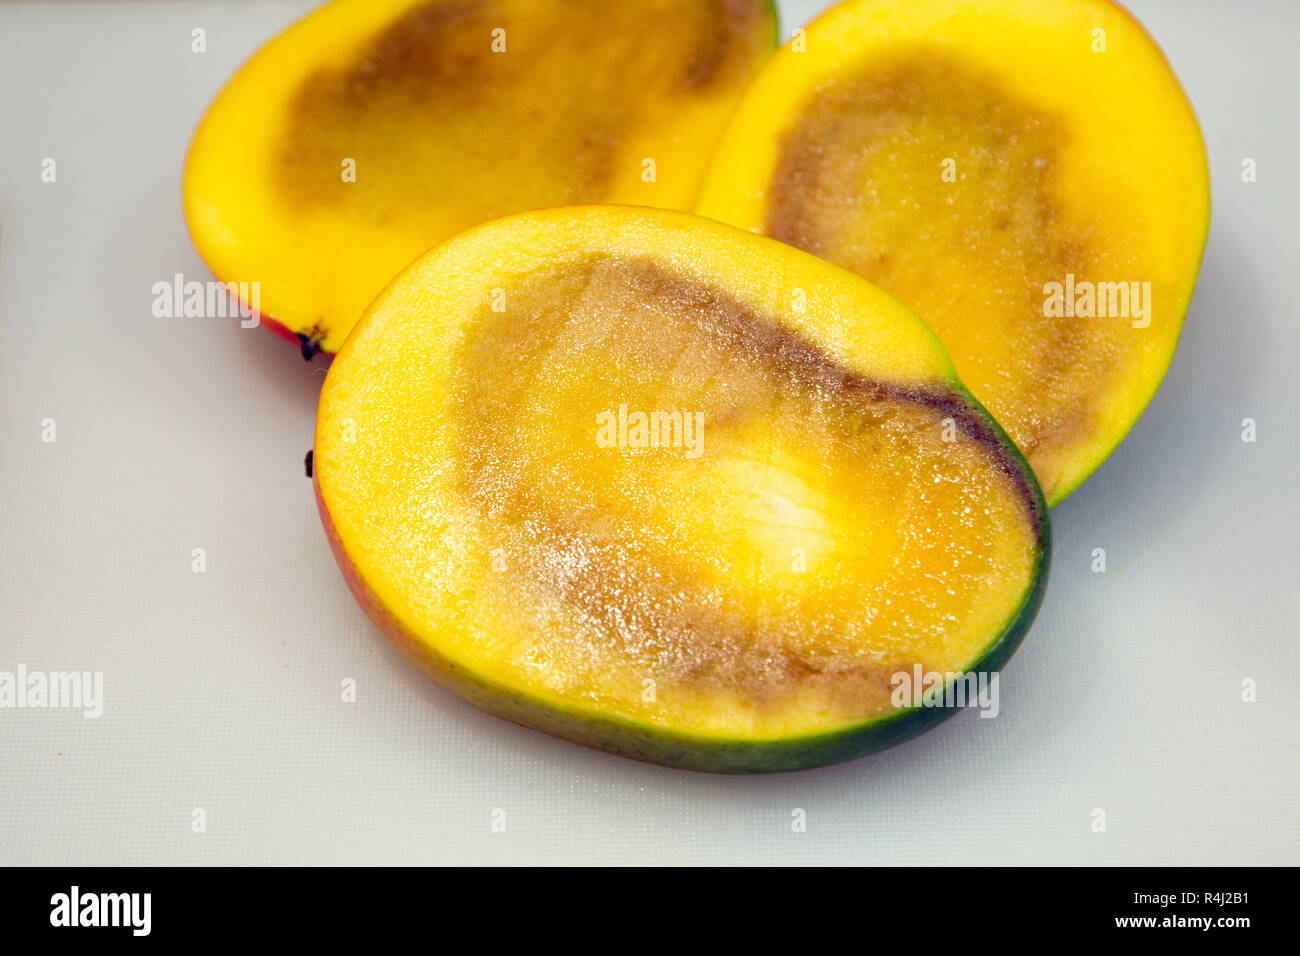 Rotting mango hi-res stock photography and images - Alamy